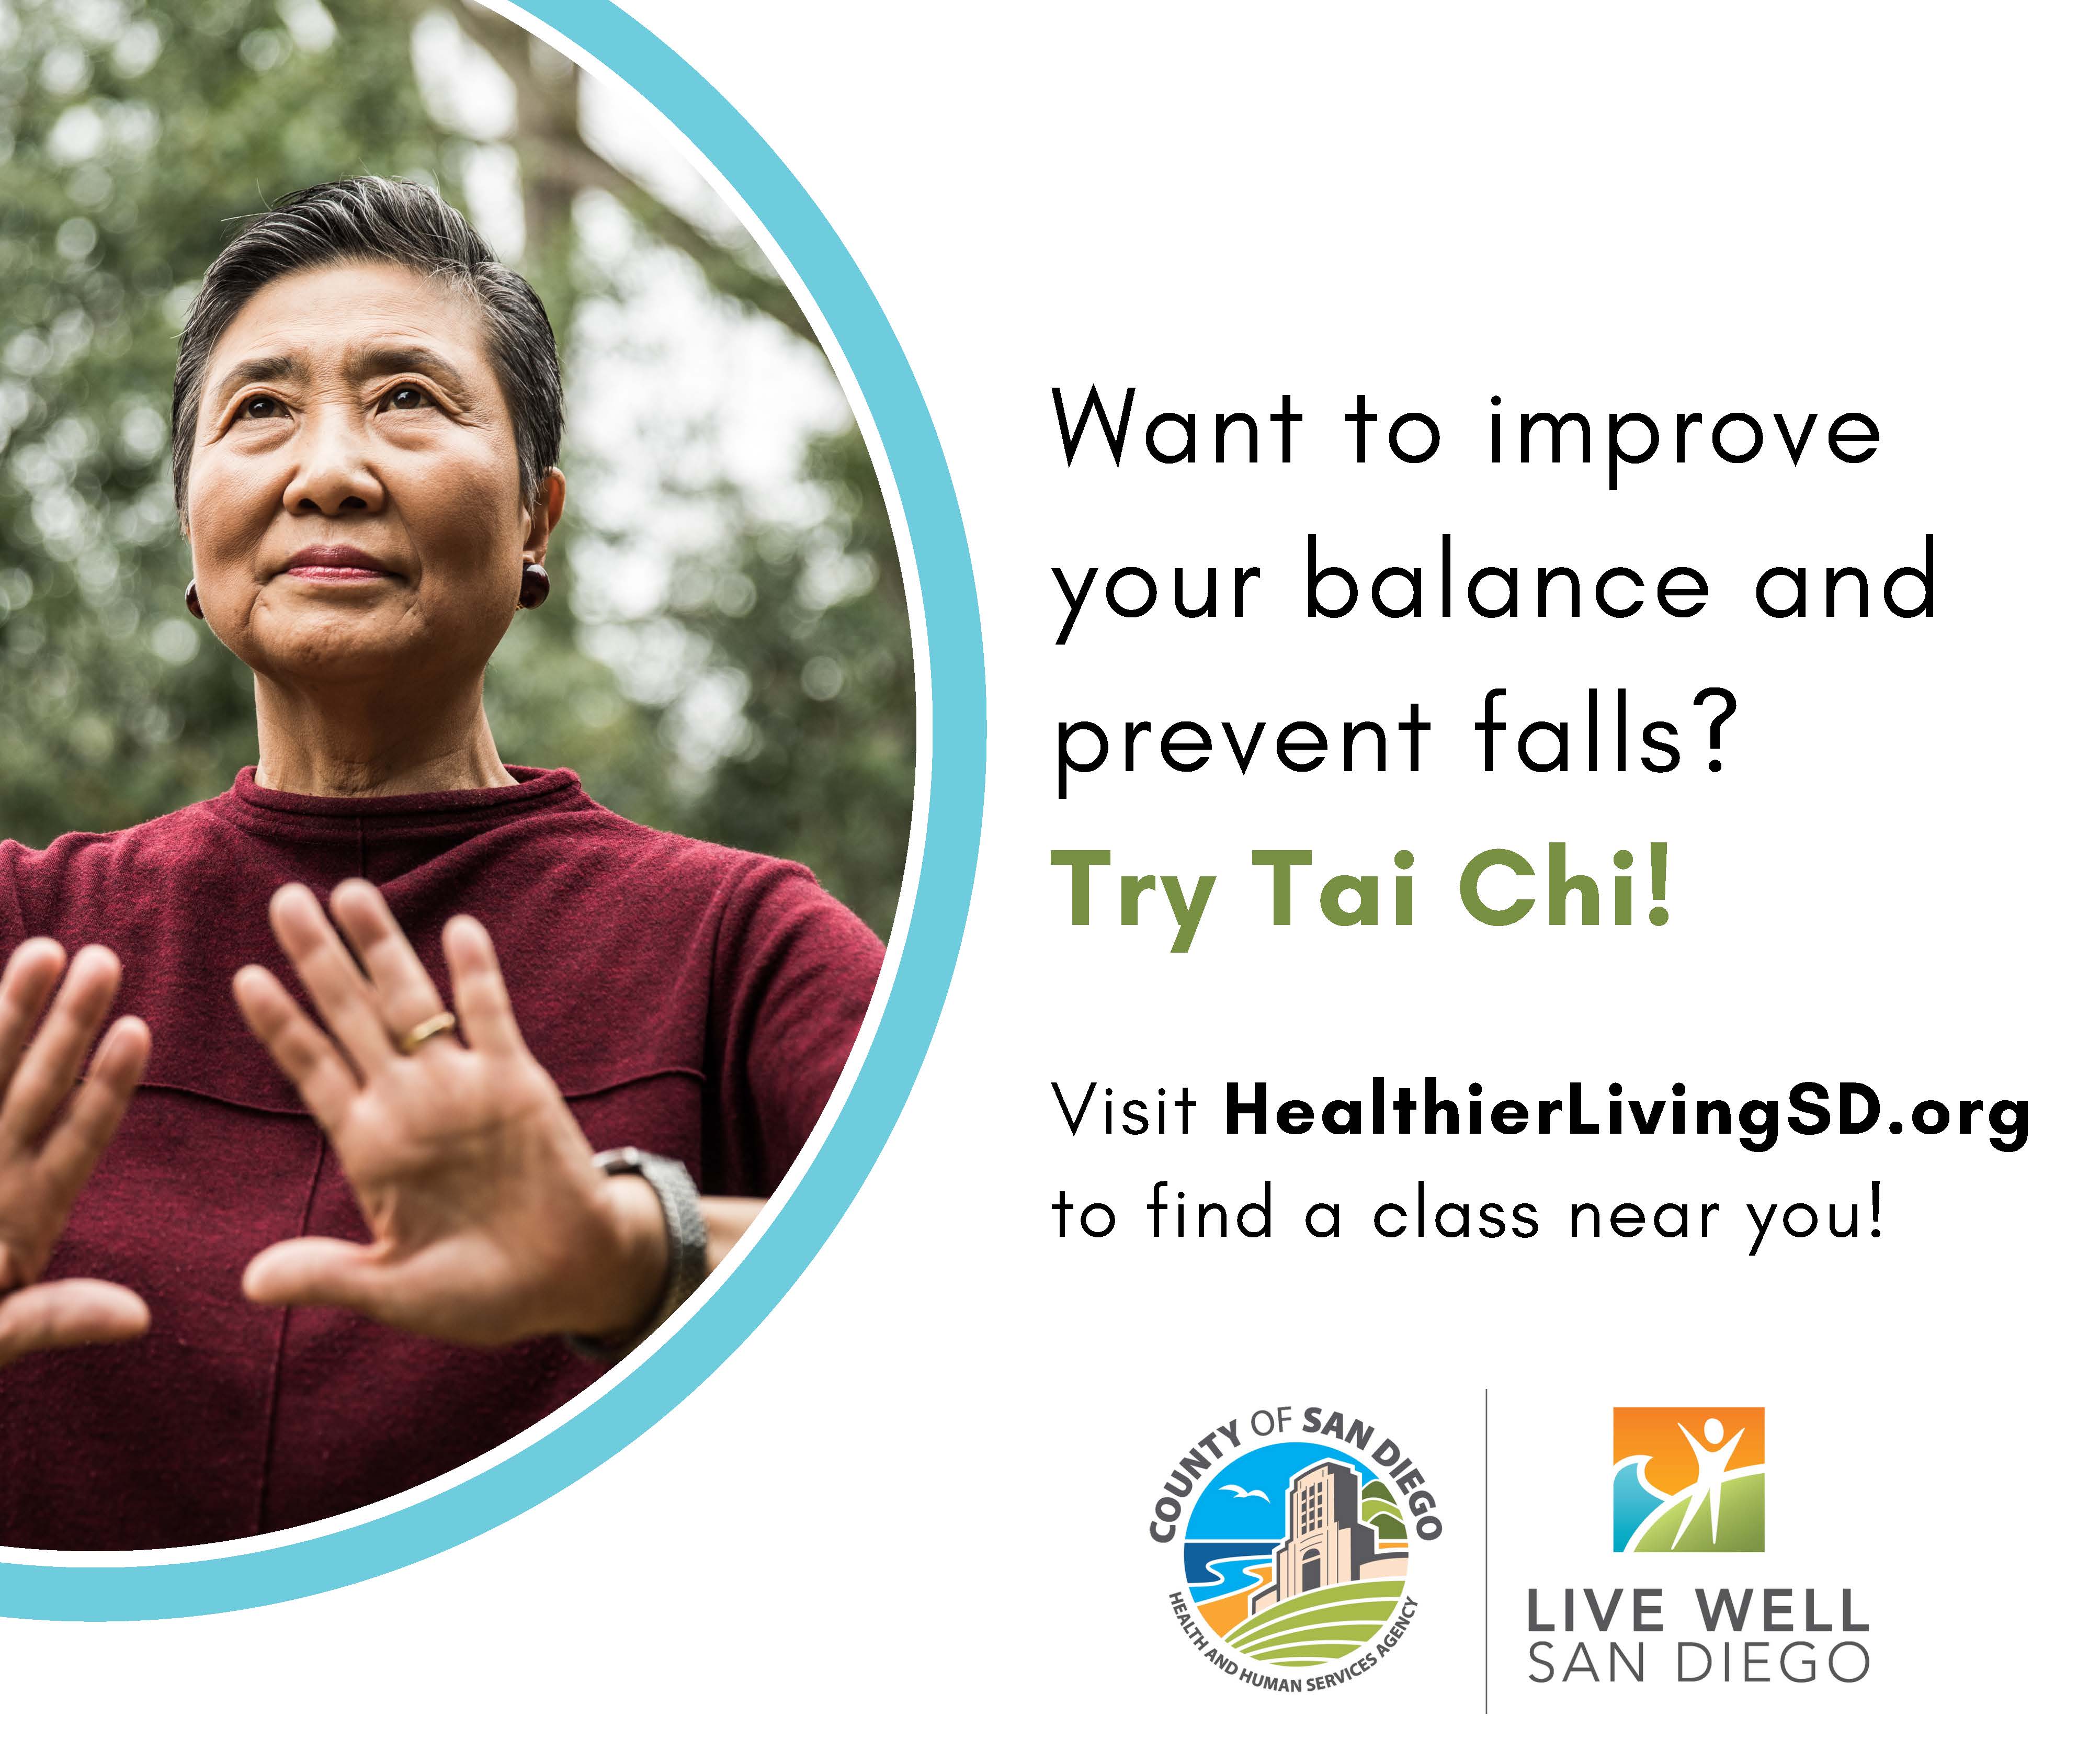 Try Tai Chi to Improve Balance, Prevent Falls